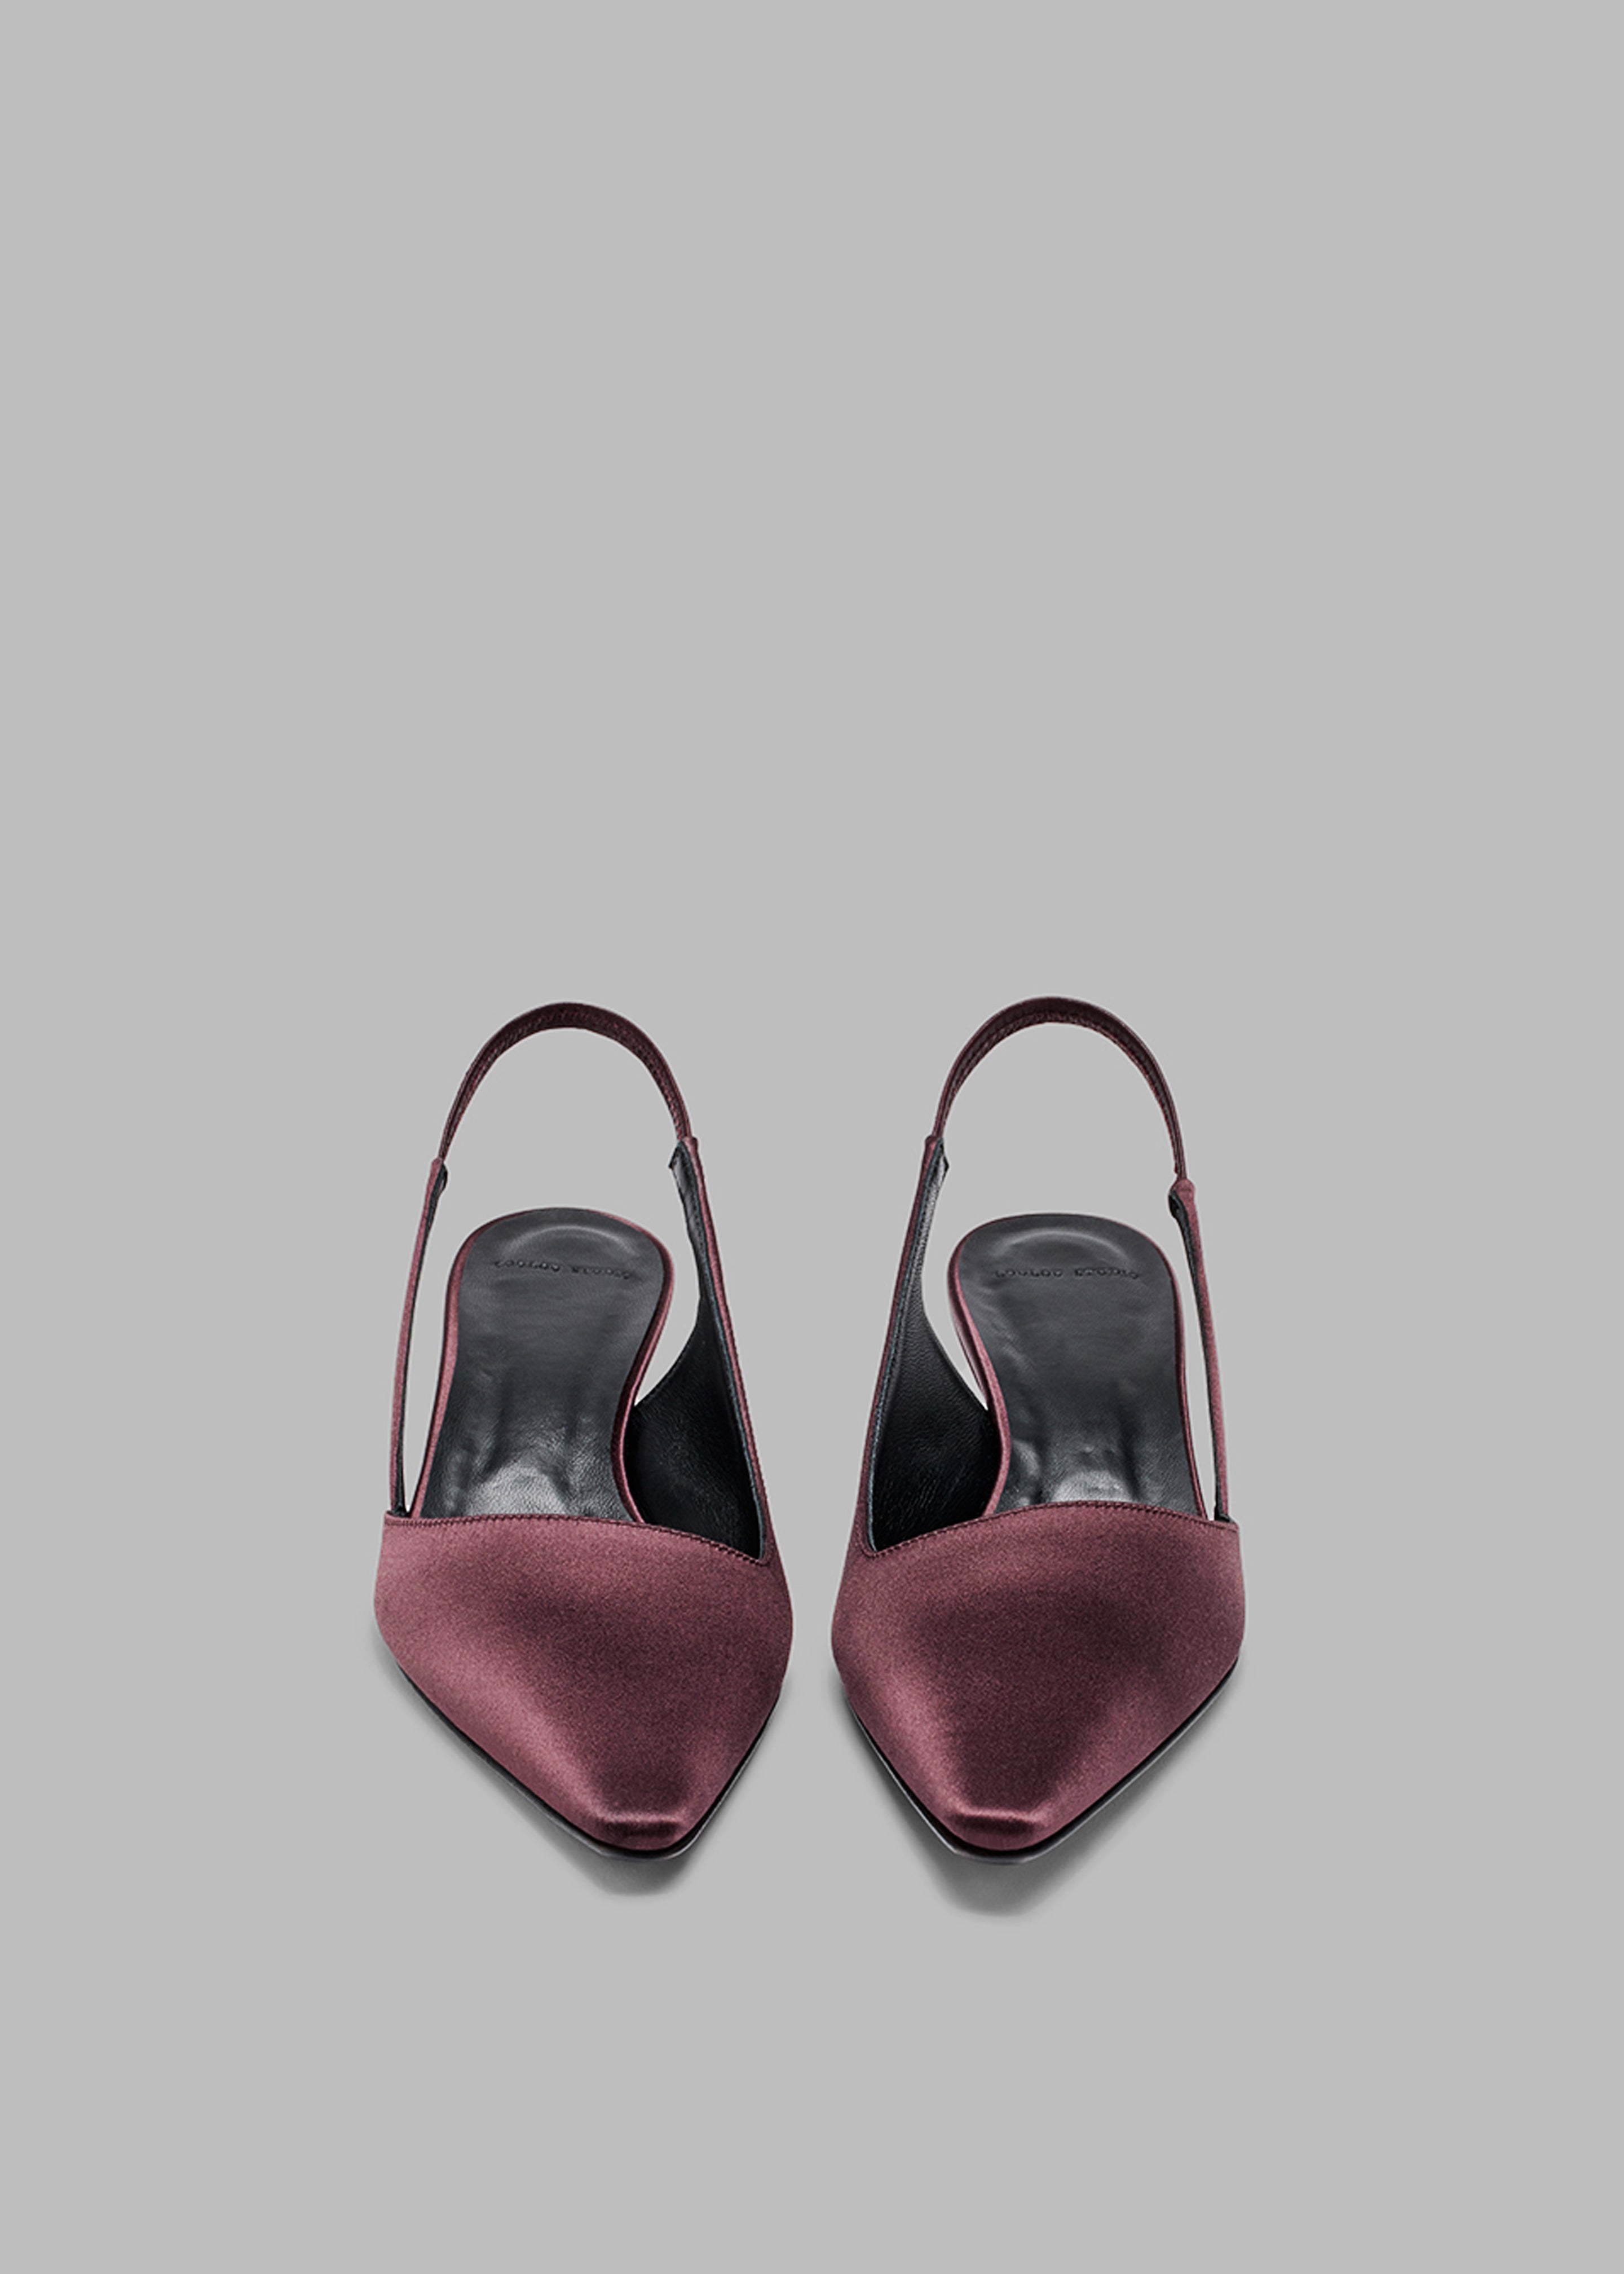 Loulou Studio Sulue Slingback Kitten Heel Shoes - Midnight Bordeaux - 3